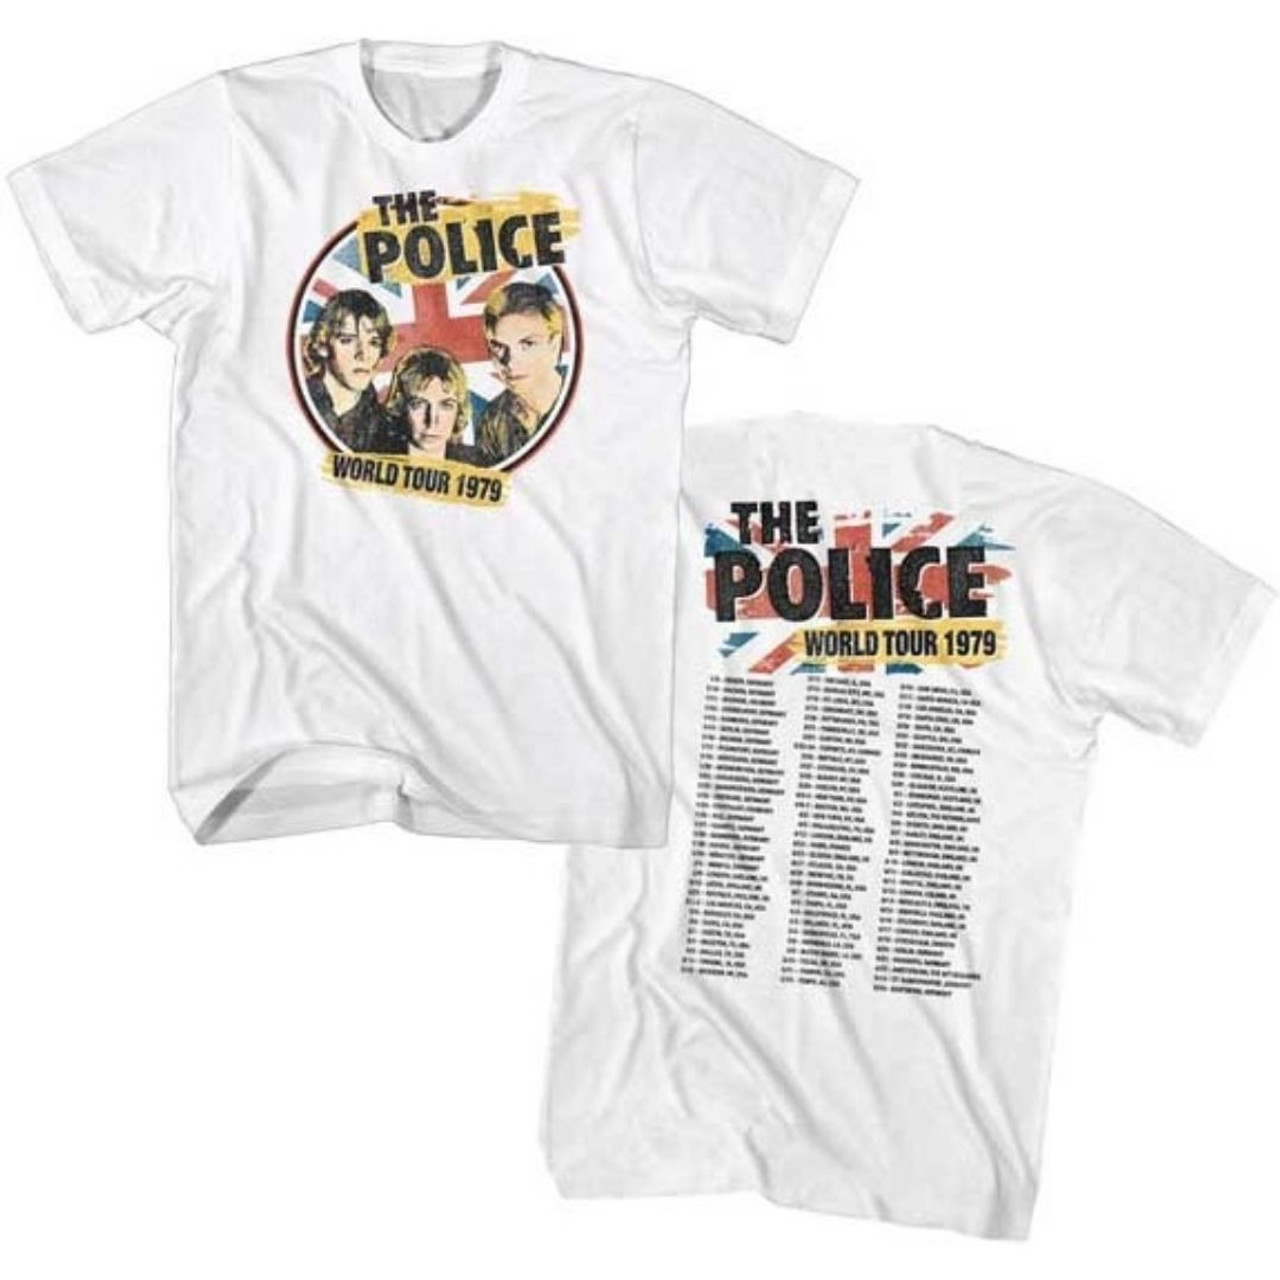 The Police Vintage Concert Fashion T-shirt - World Tour 1979. Men's Unisex  White Shirt - Rocker Rags